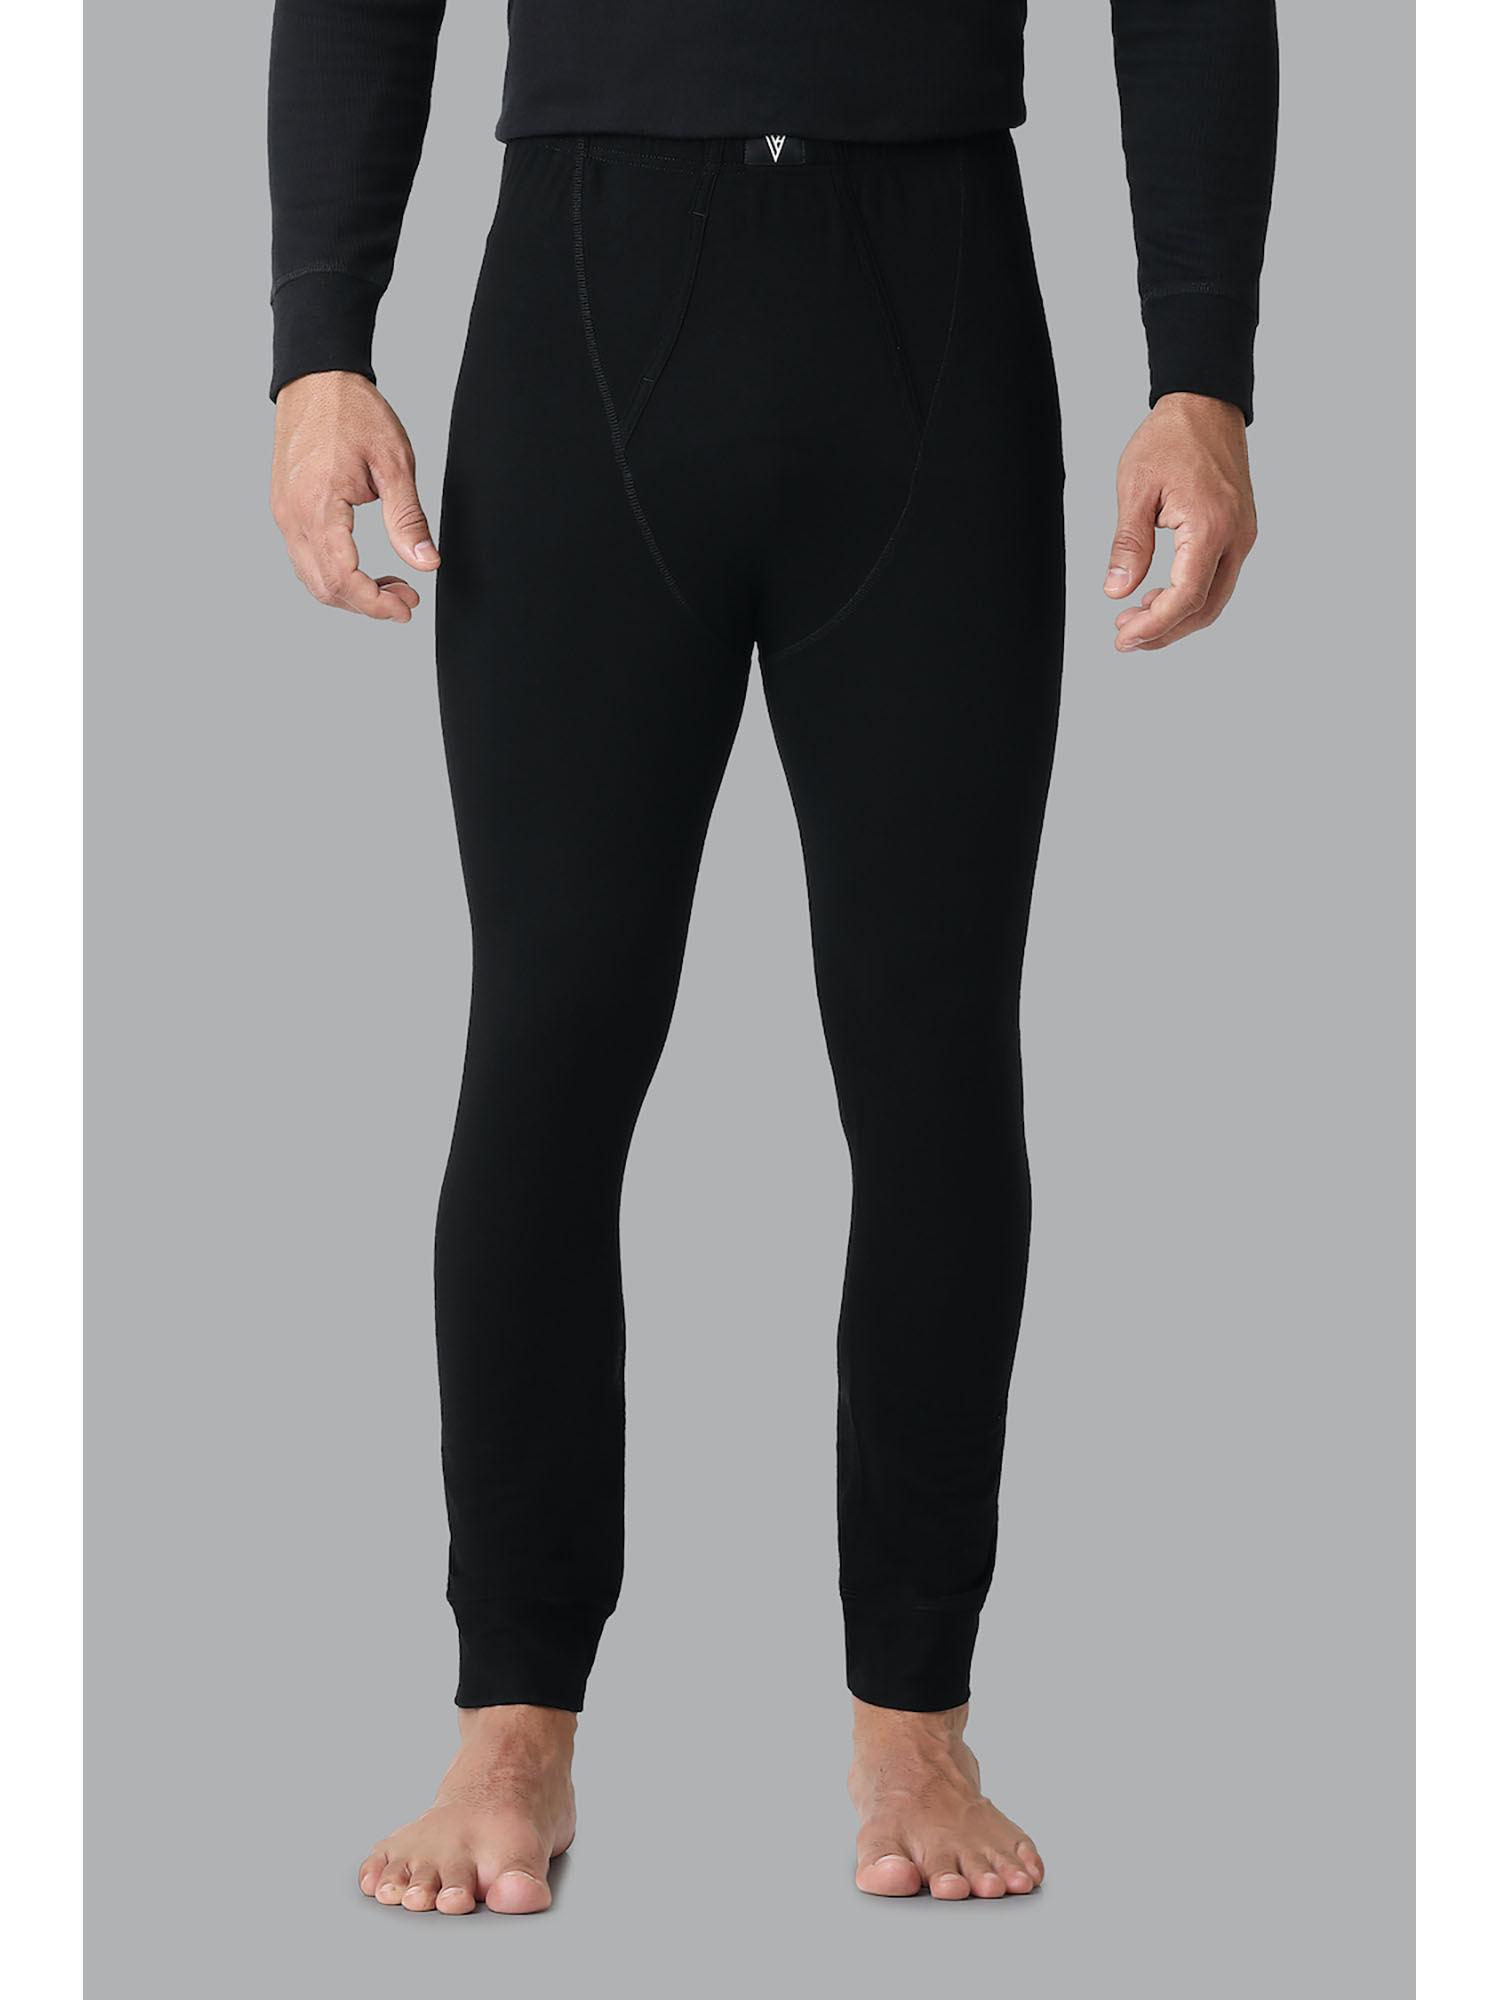 innerwear-men-black-solid-thermal-bottom